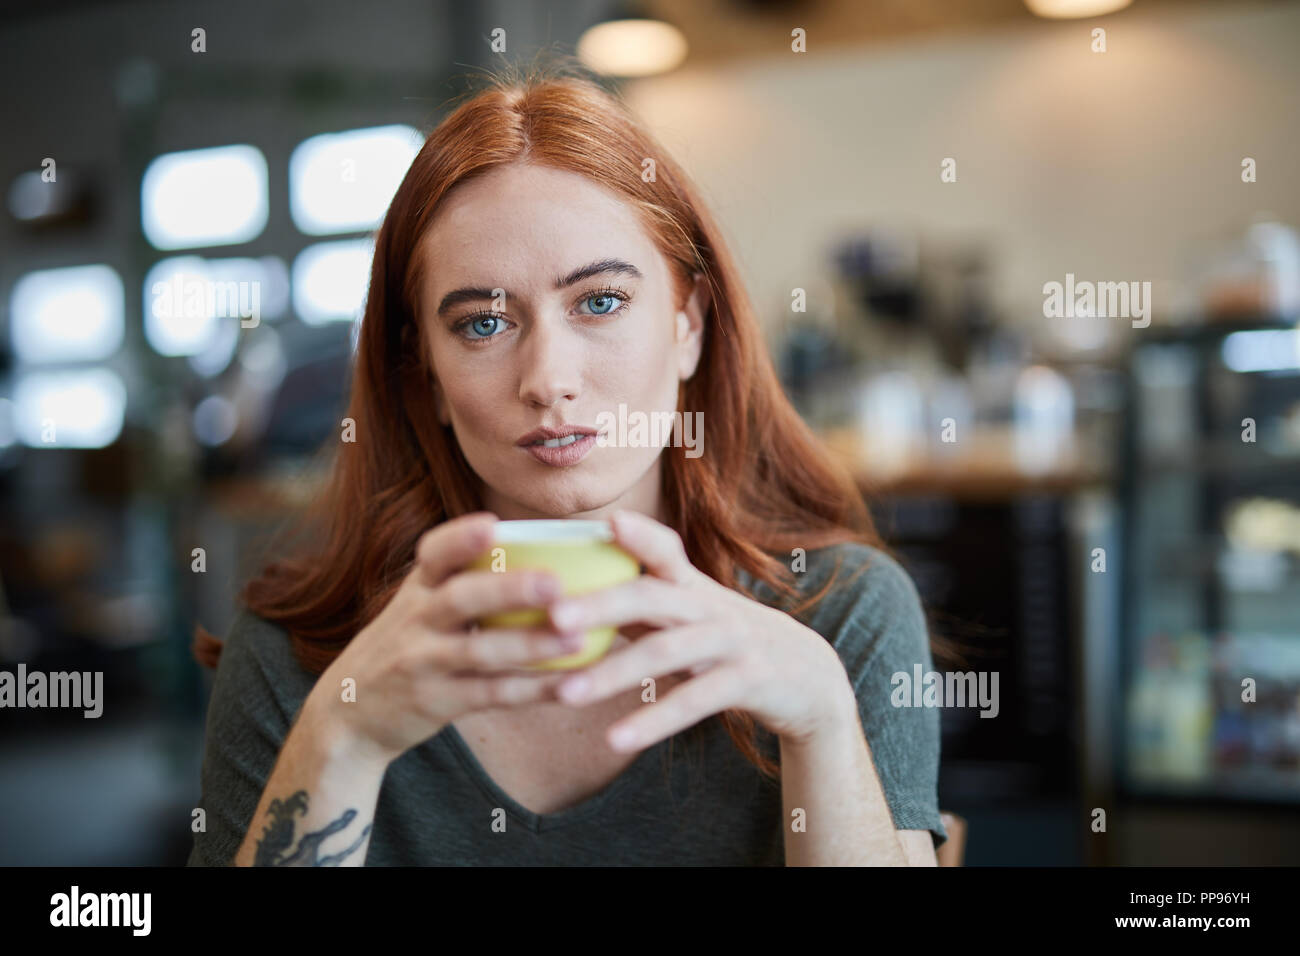 Una singola femmina, si siede in una città cafe tenendo una bevanda calda in una tazza, guardando la fotocamera Foto Stock